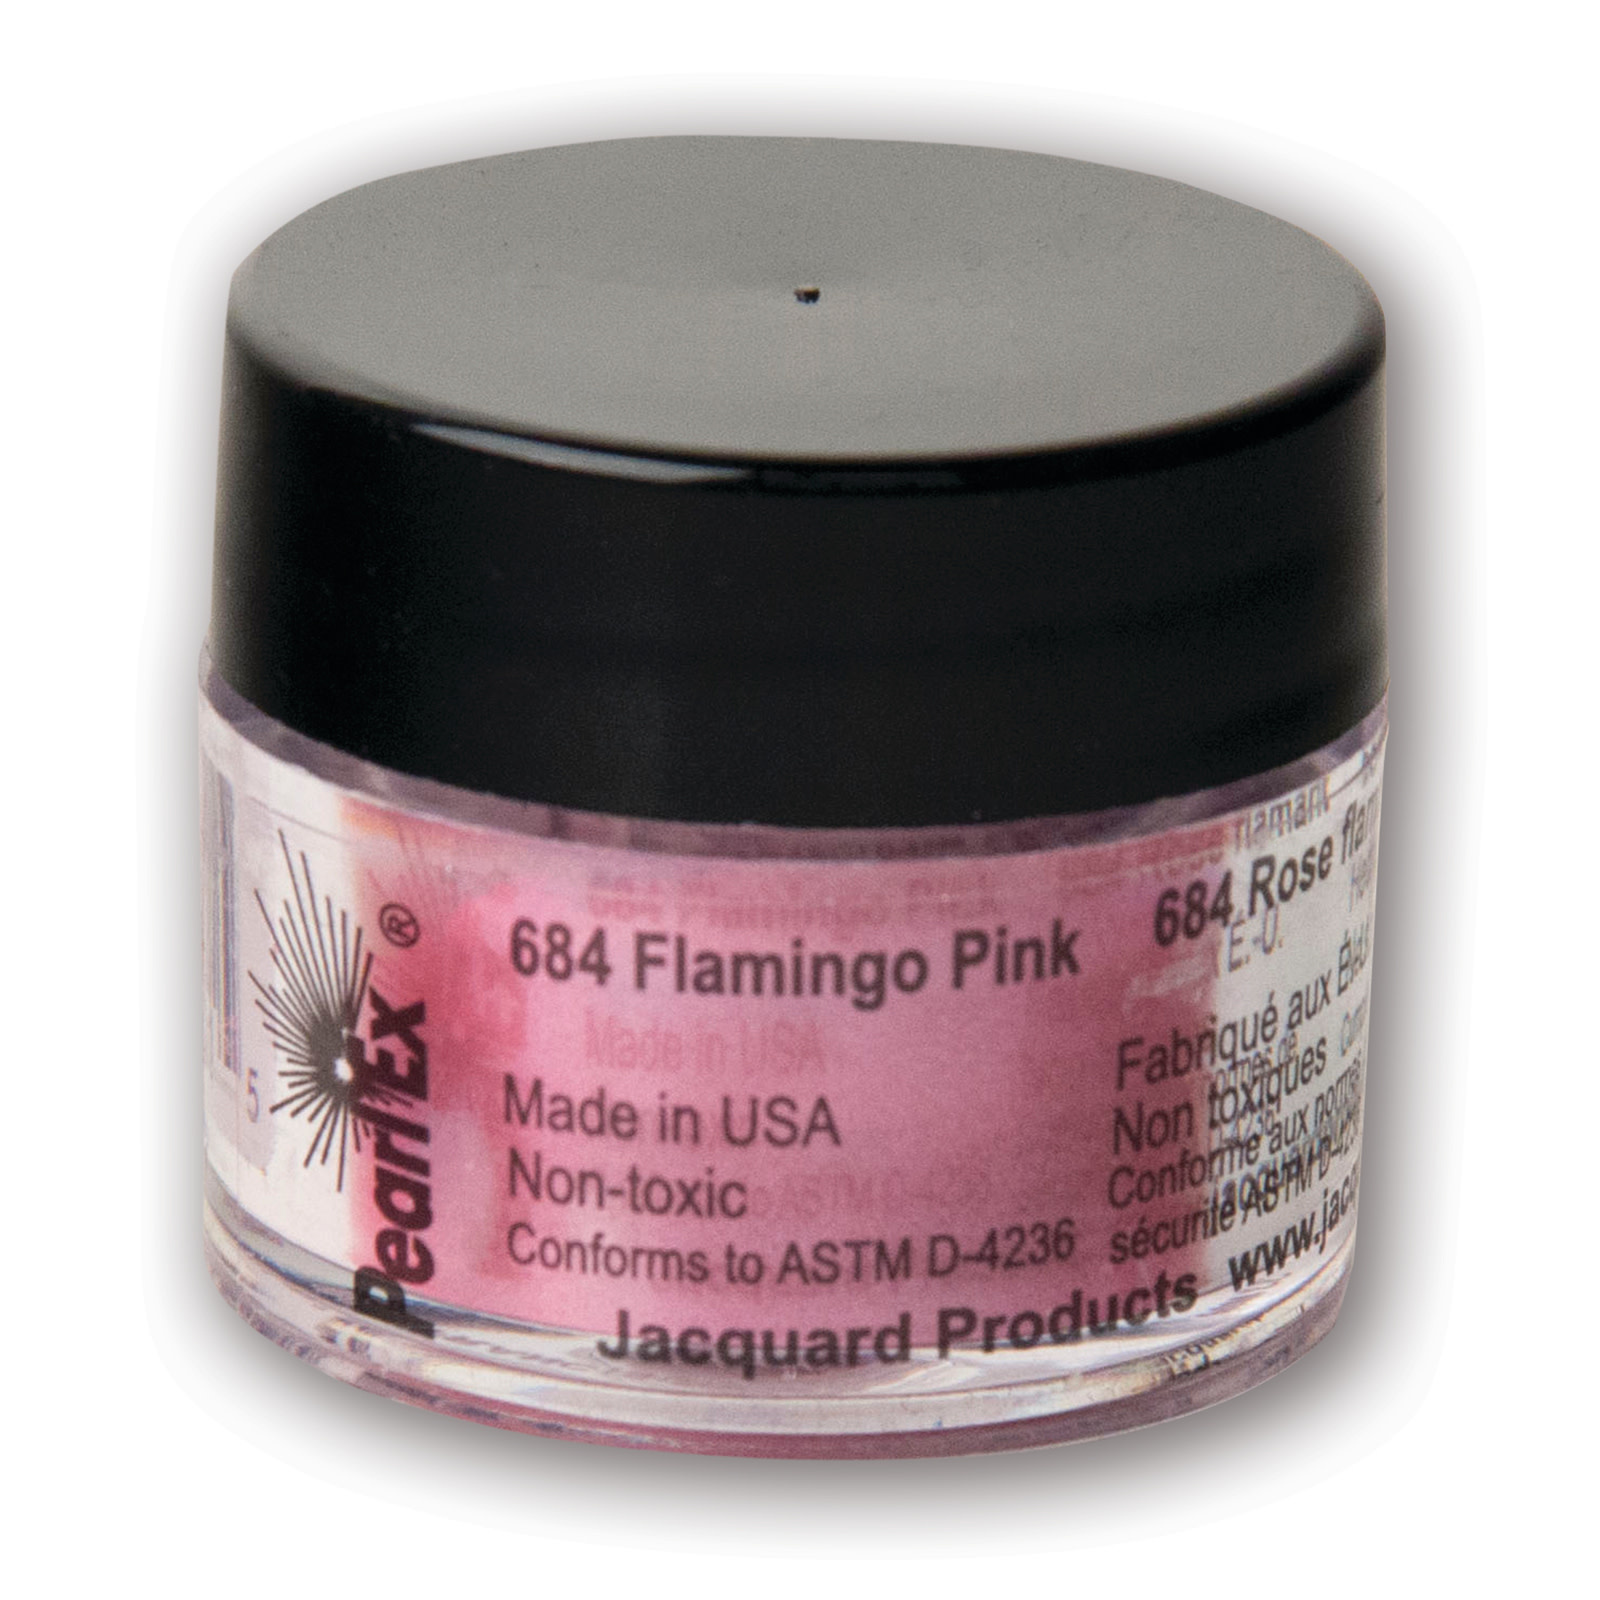 Jacquard Pearl Ex Powdered Pigment, 3g Jar, Flamingo Pink